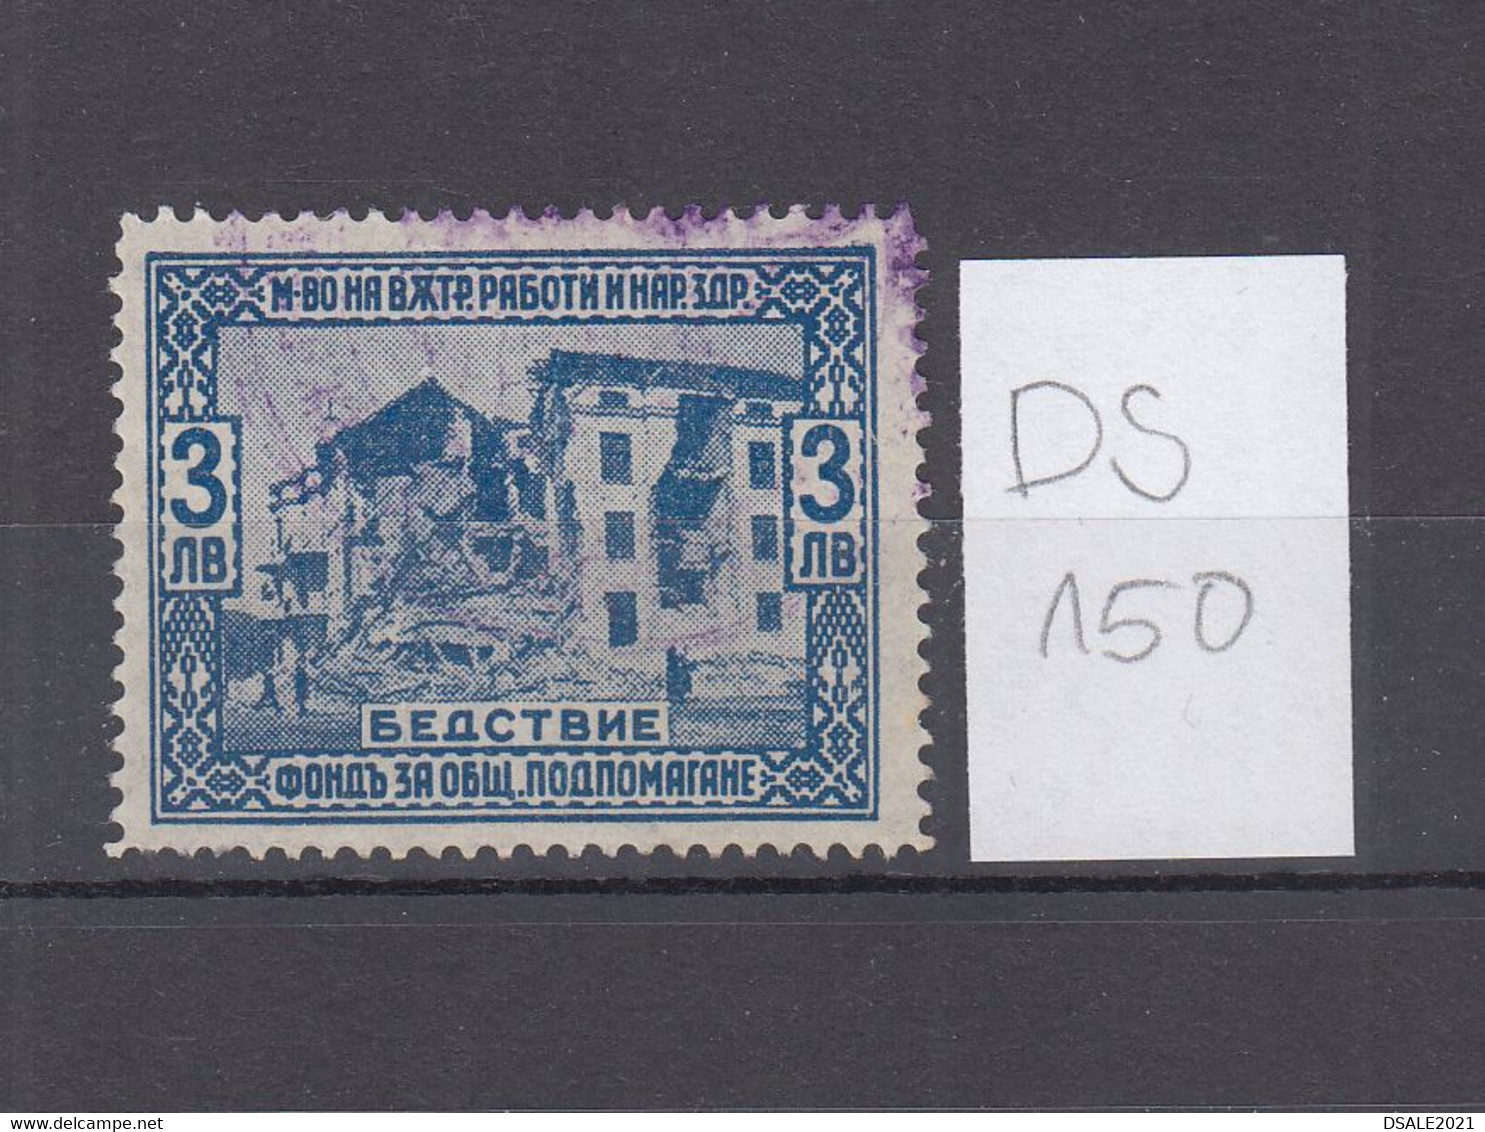 Bulgaria Bulgarie Bulgarije 1930s Disaster Fund 3Lv. Fiscal Revenue Stamp Bulgarian Revenues (ds150) - Timbres De Service